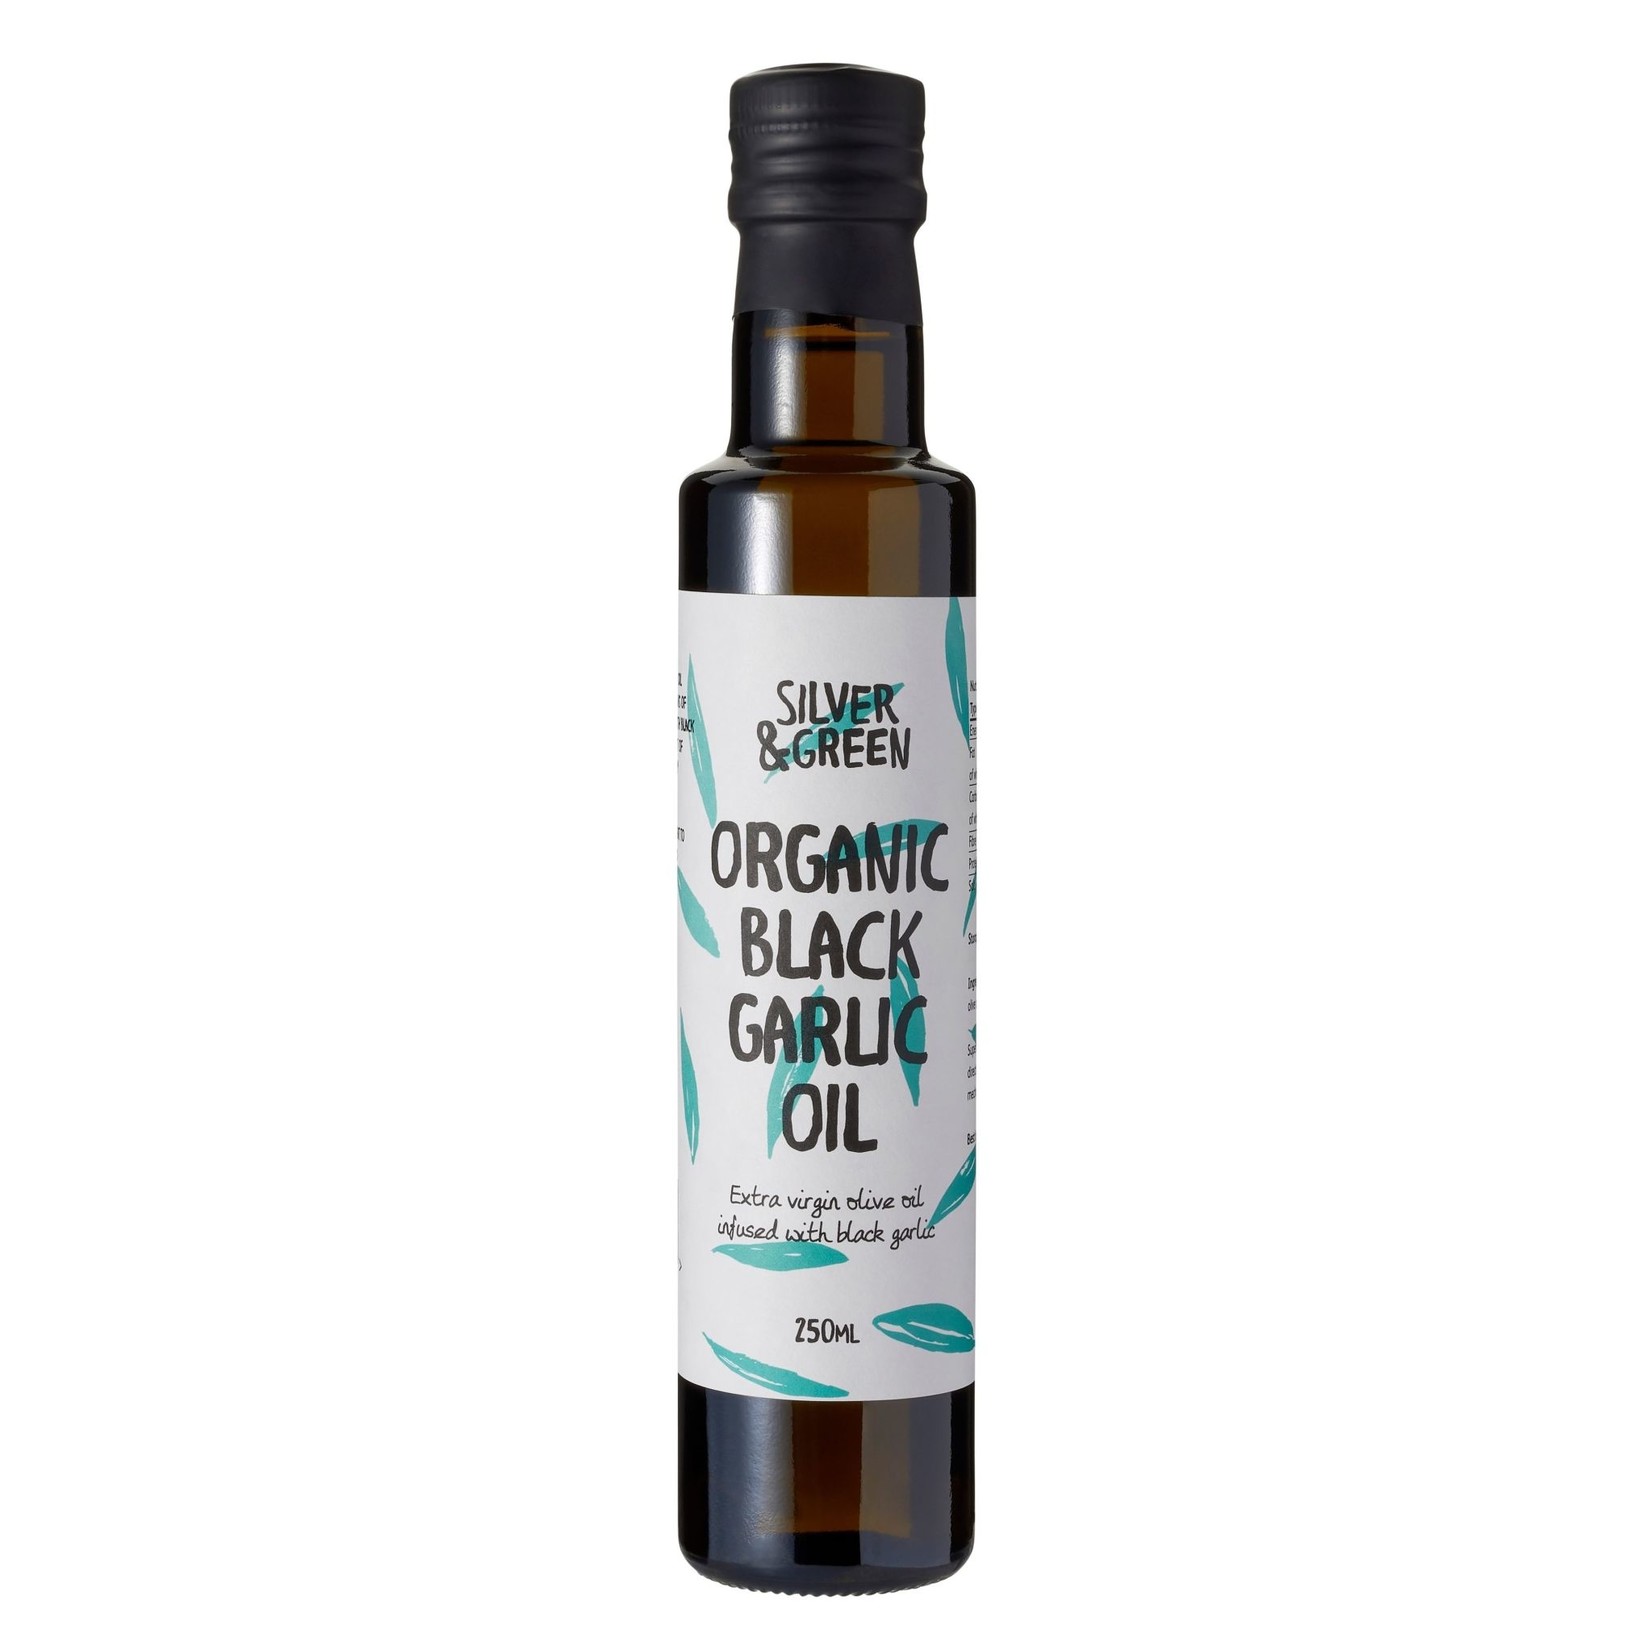 SILVER & GREEN Organic Black Garlic Oil